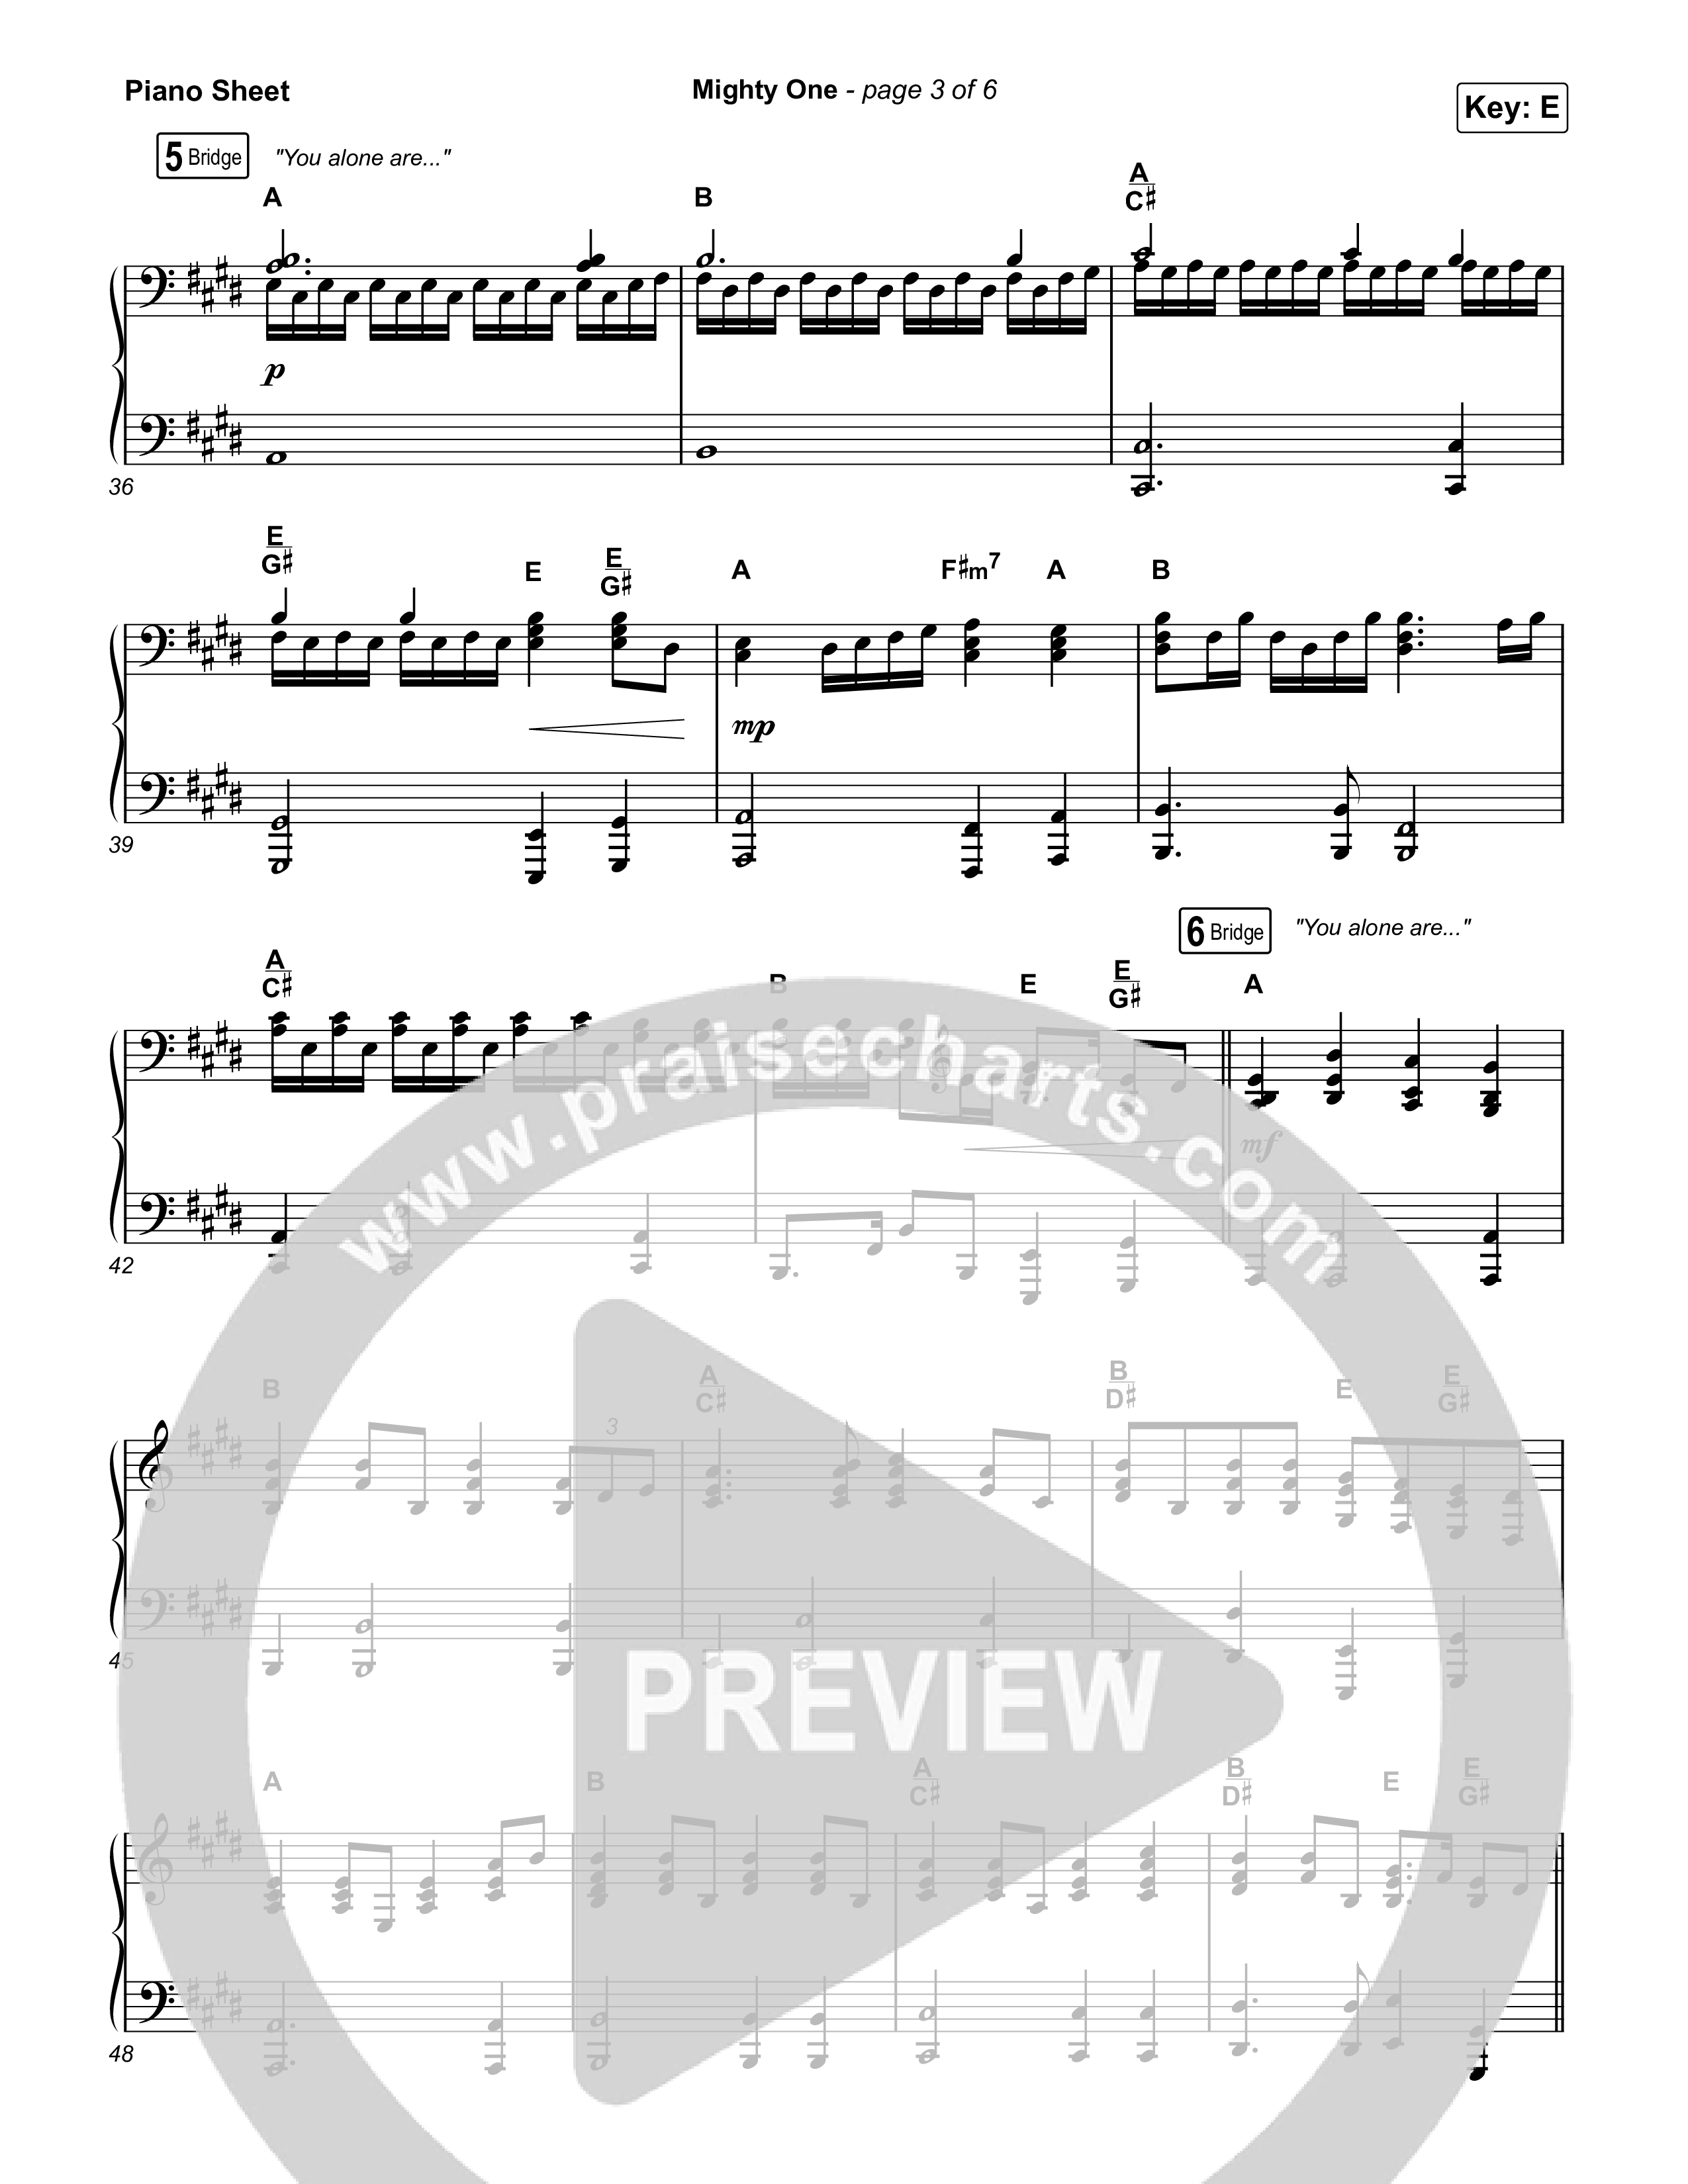 Mighty One Piano Sheet (Maverick City Music / Maryanne J. George / Todd Dulaney)